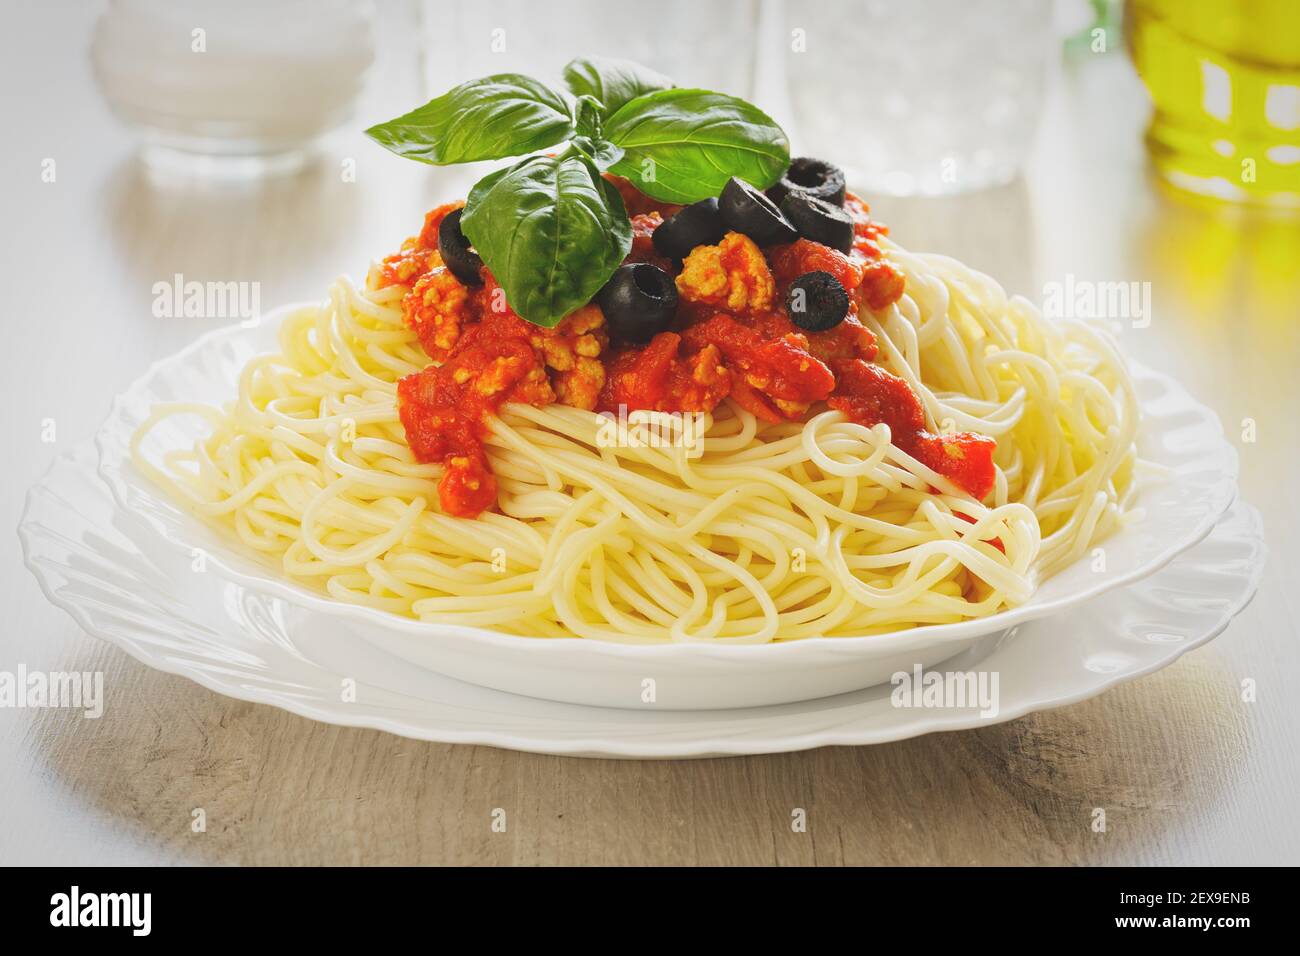 Resepi spaghetti bolognese simple